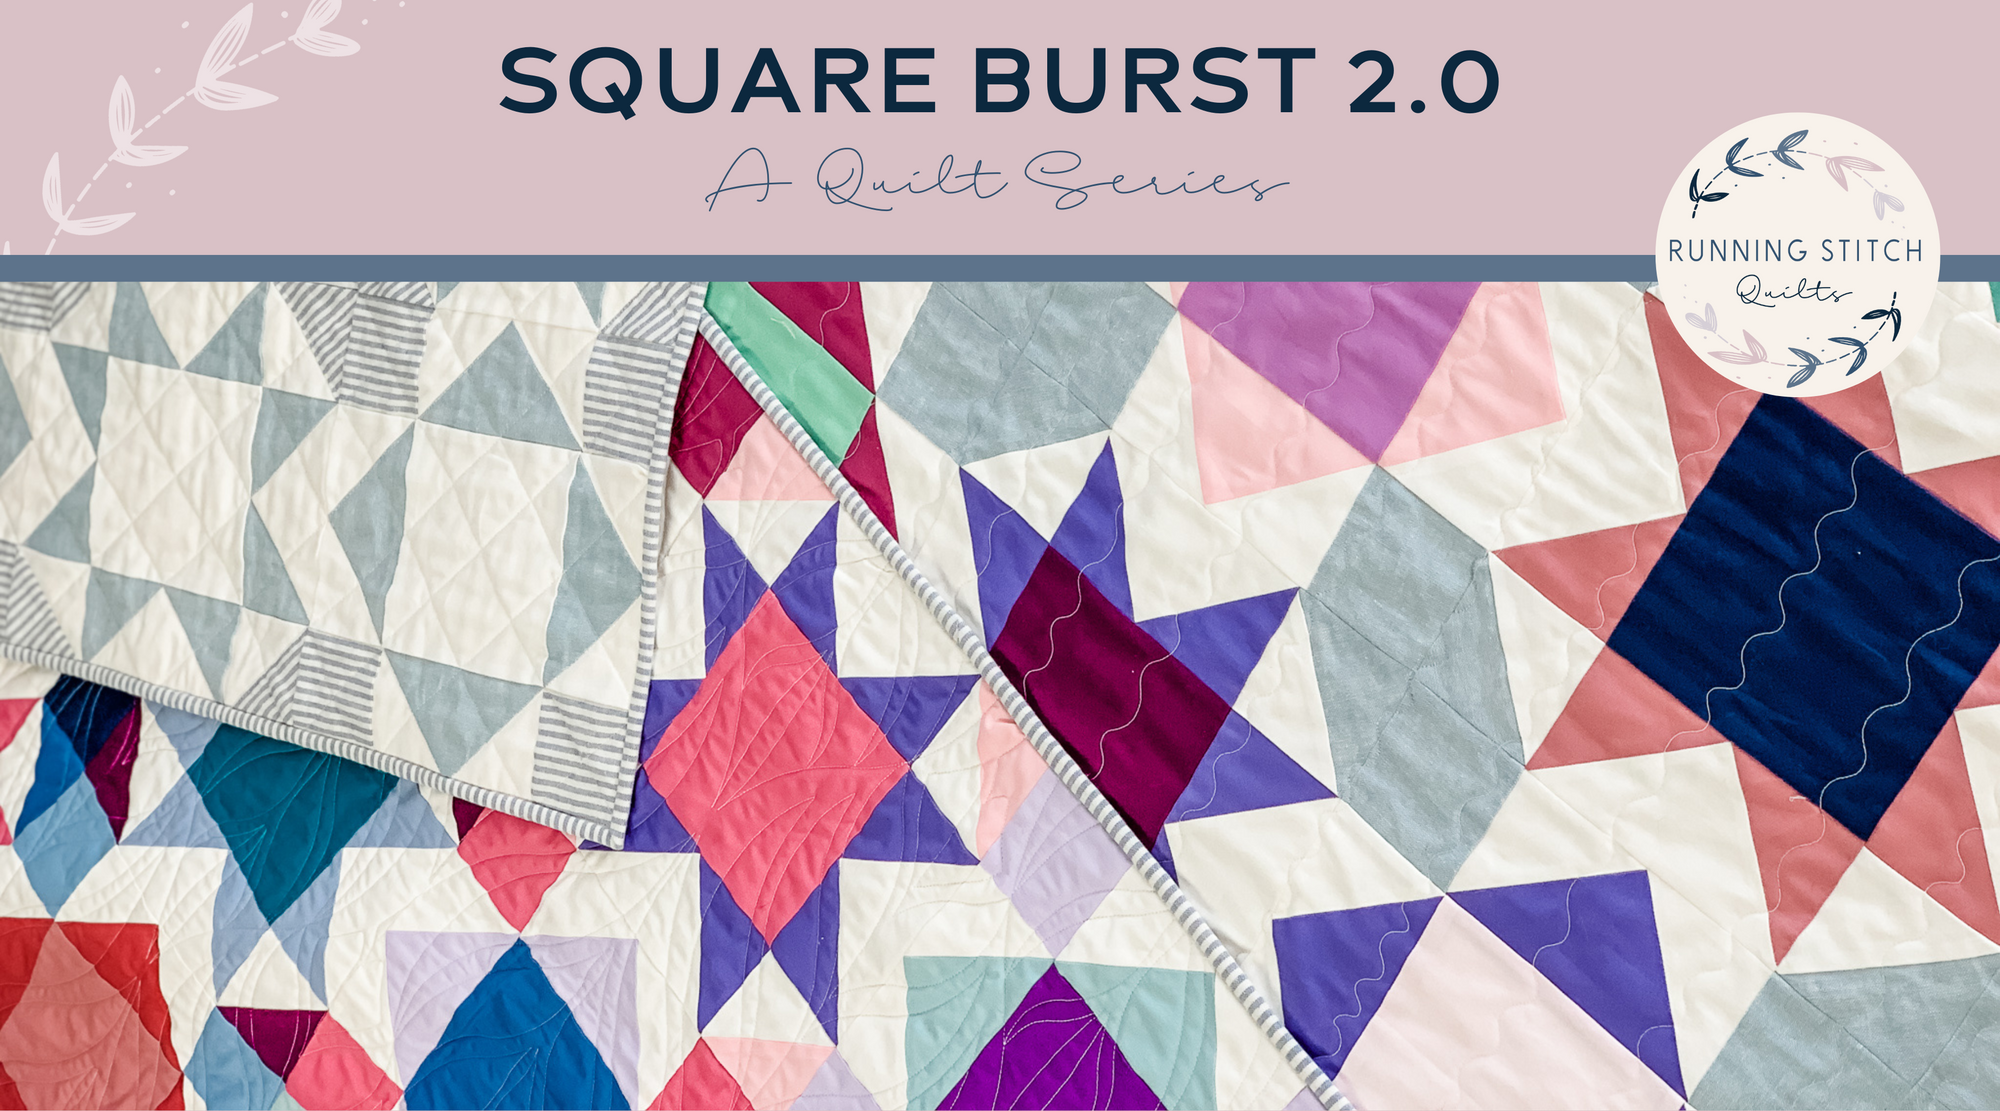 The Square Burst 2.0 Series